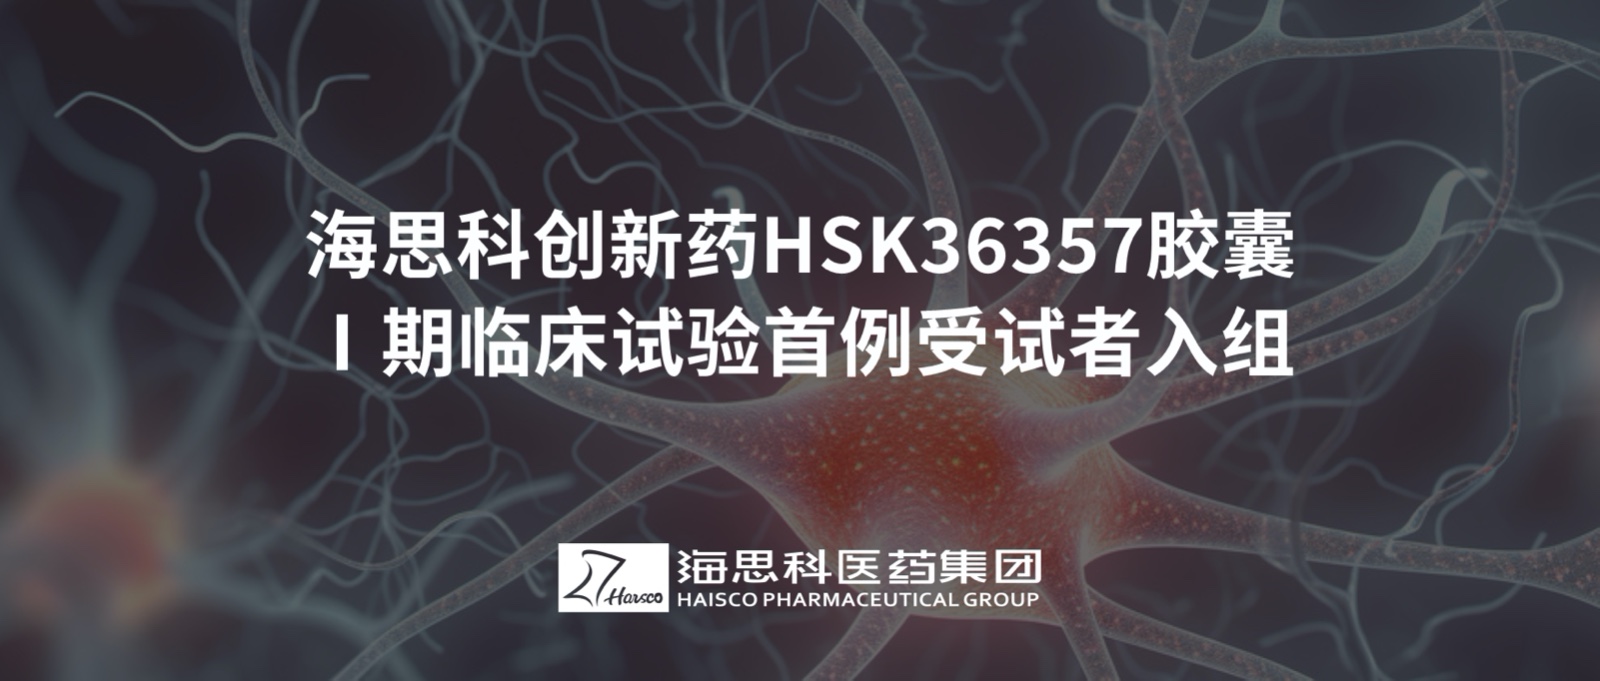 AG电投厅创新药HSK36357胶囊Ⅰ期临床试验首例受试者入组